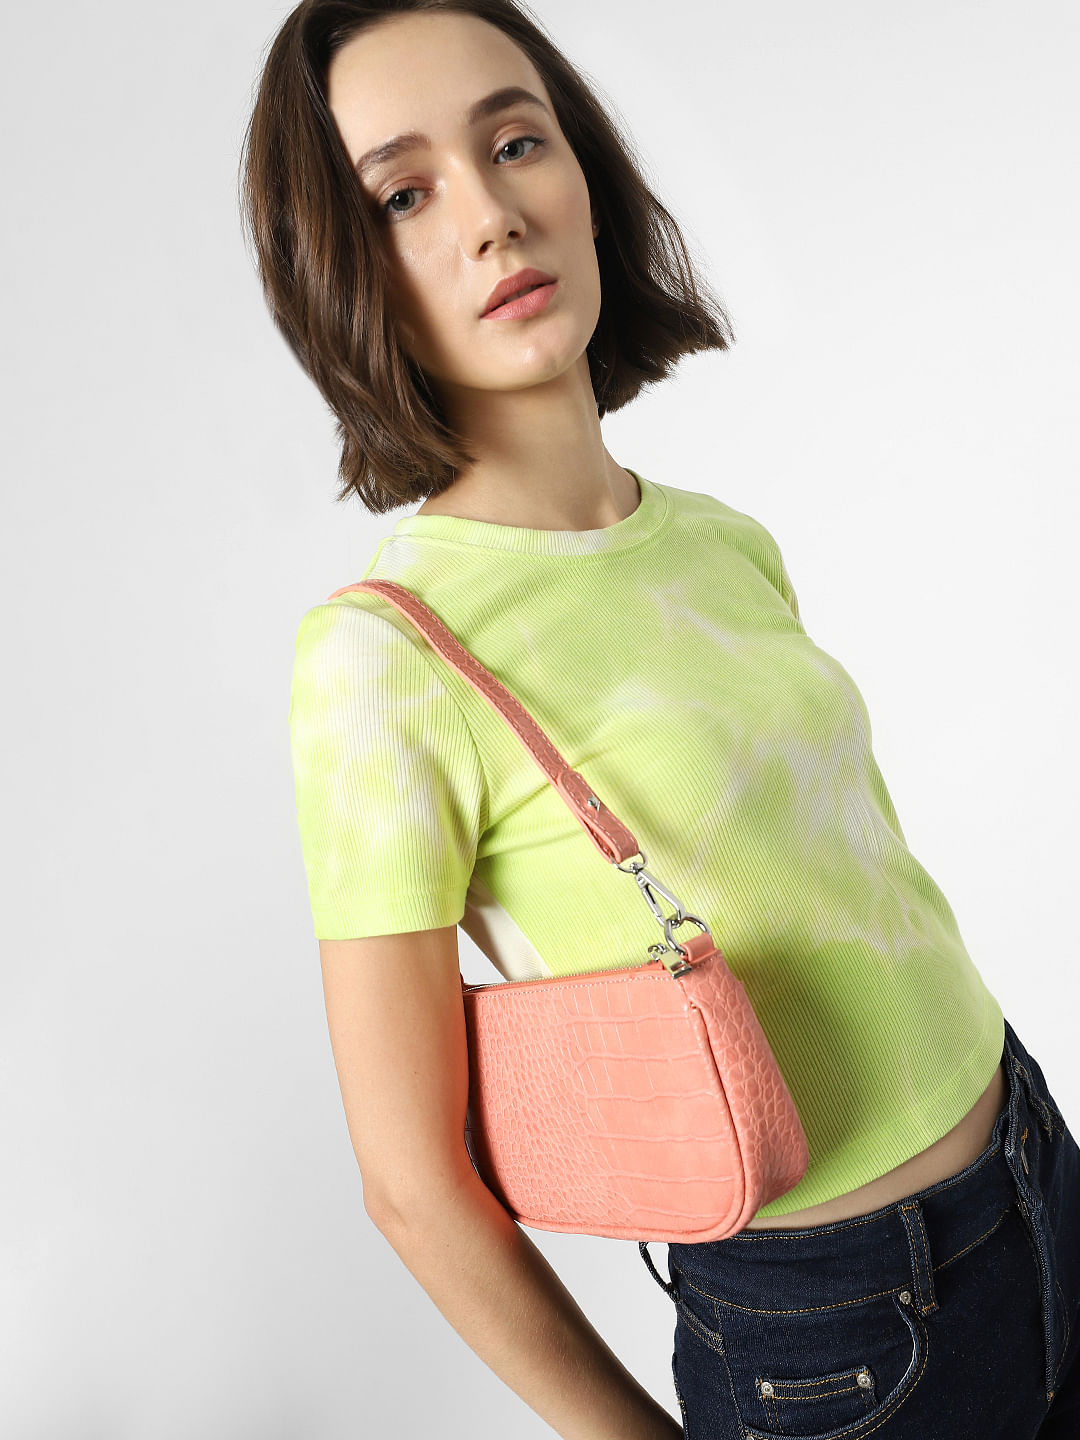 Fashion Handbags for Sale | Shop Online